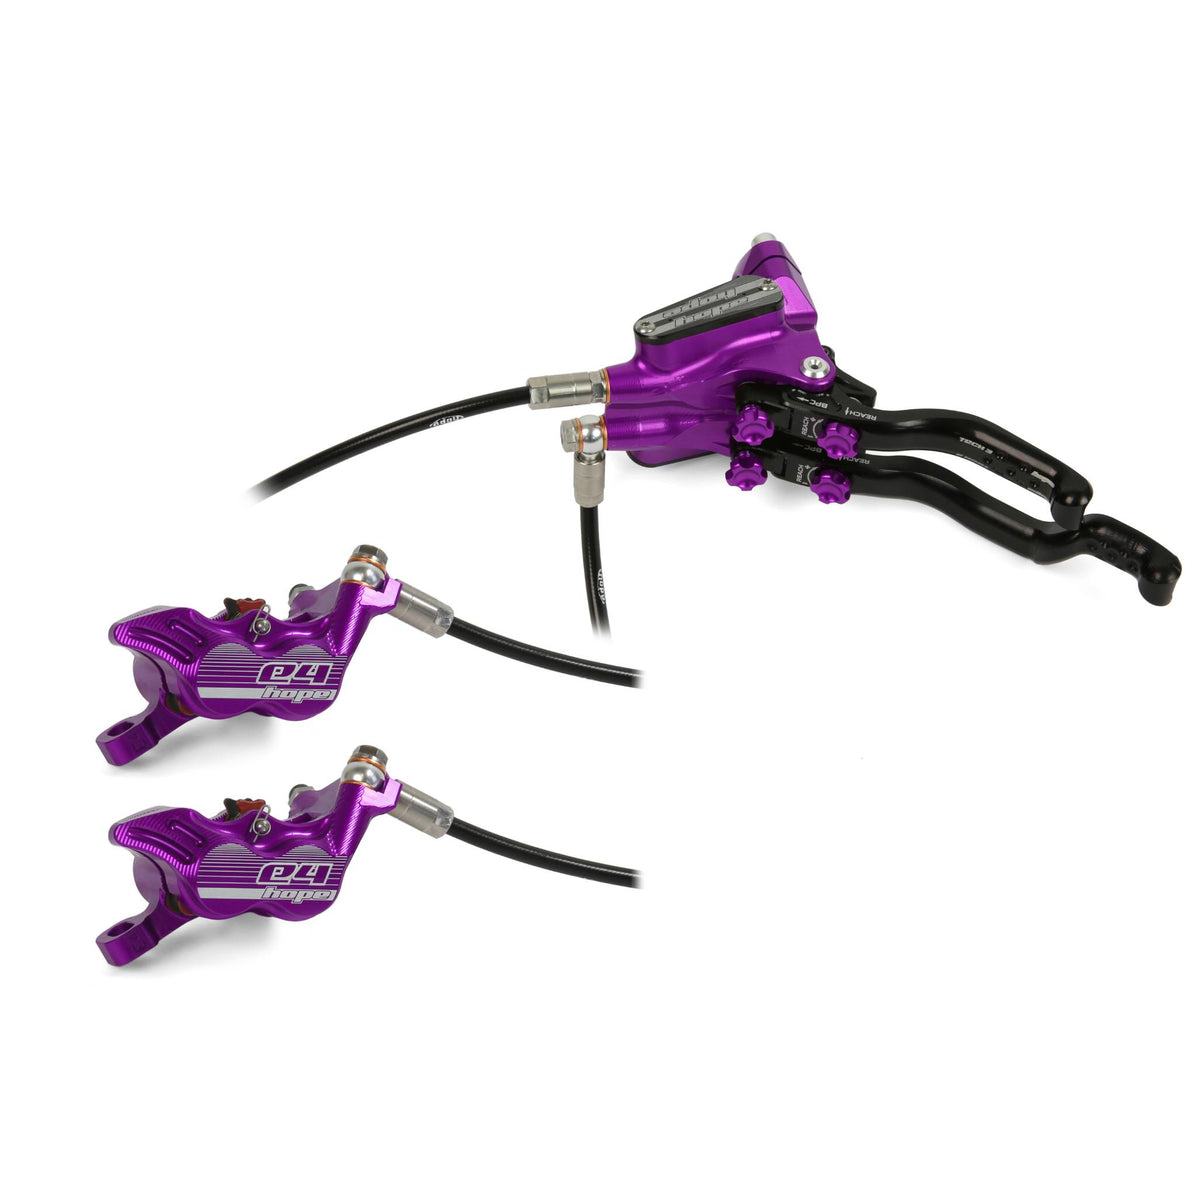 Hope Tech 3 E4 Duo lever - Purple RH